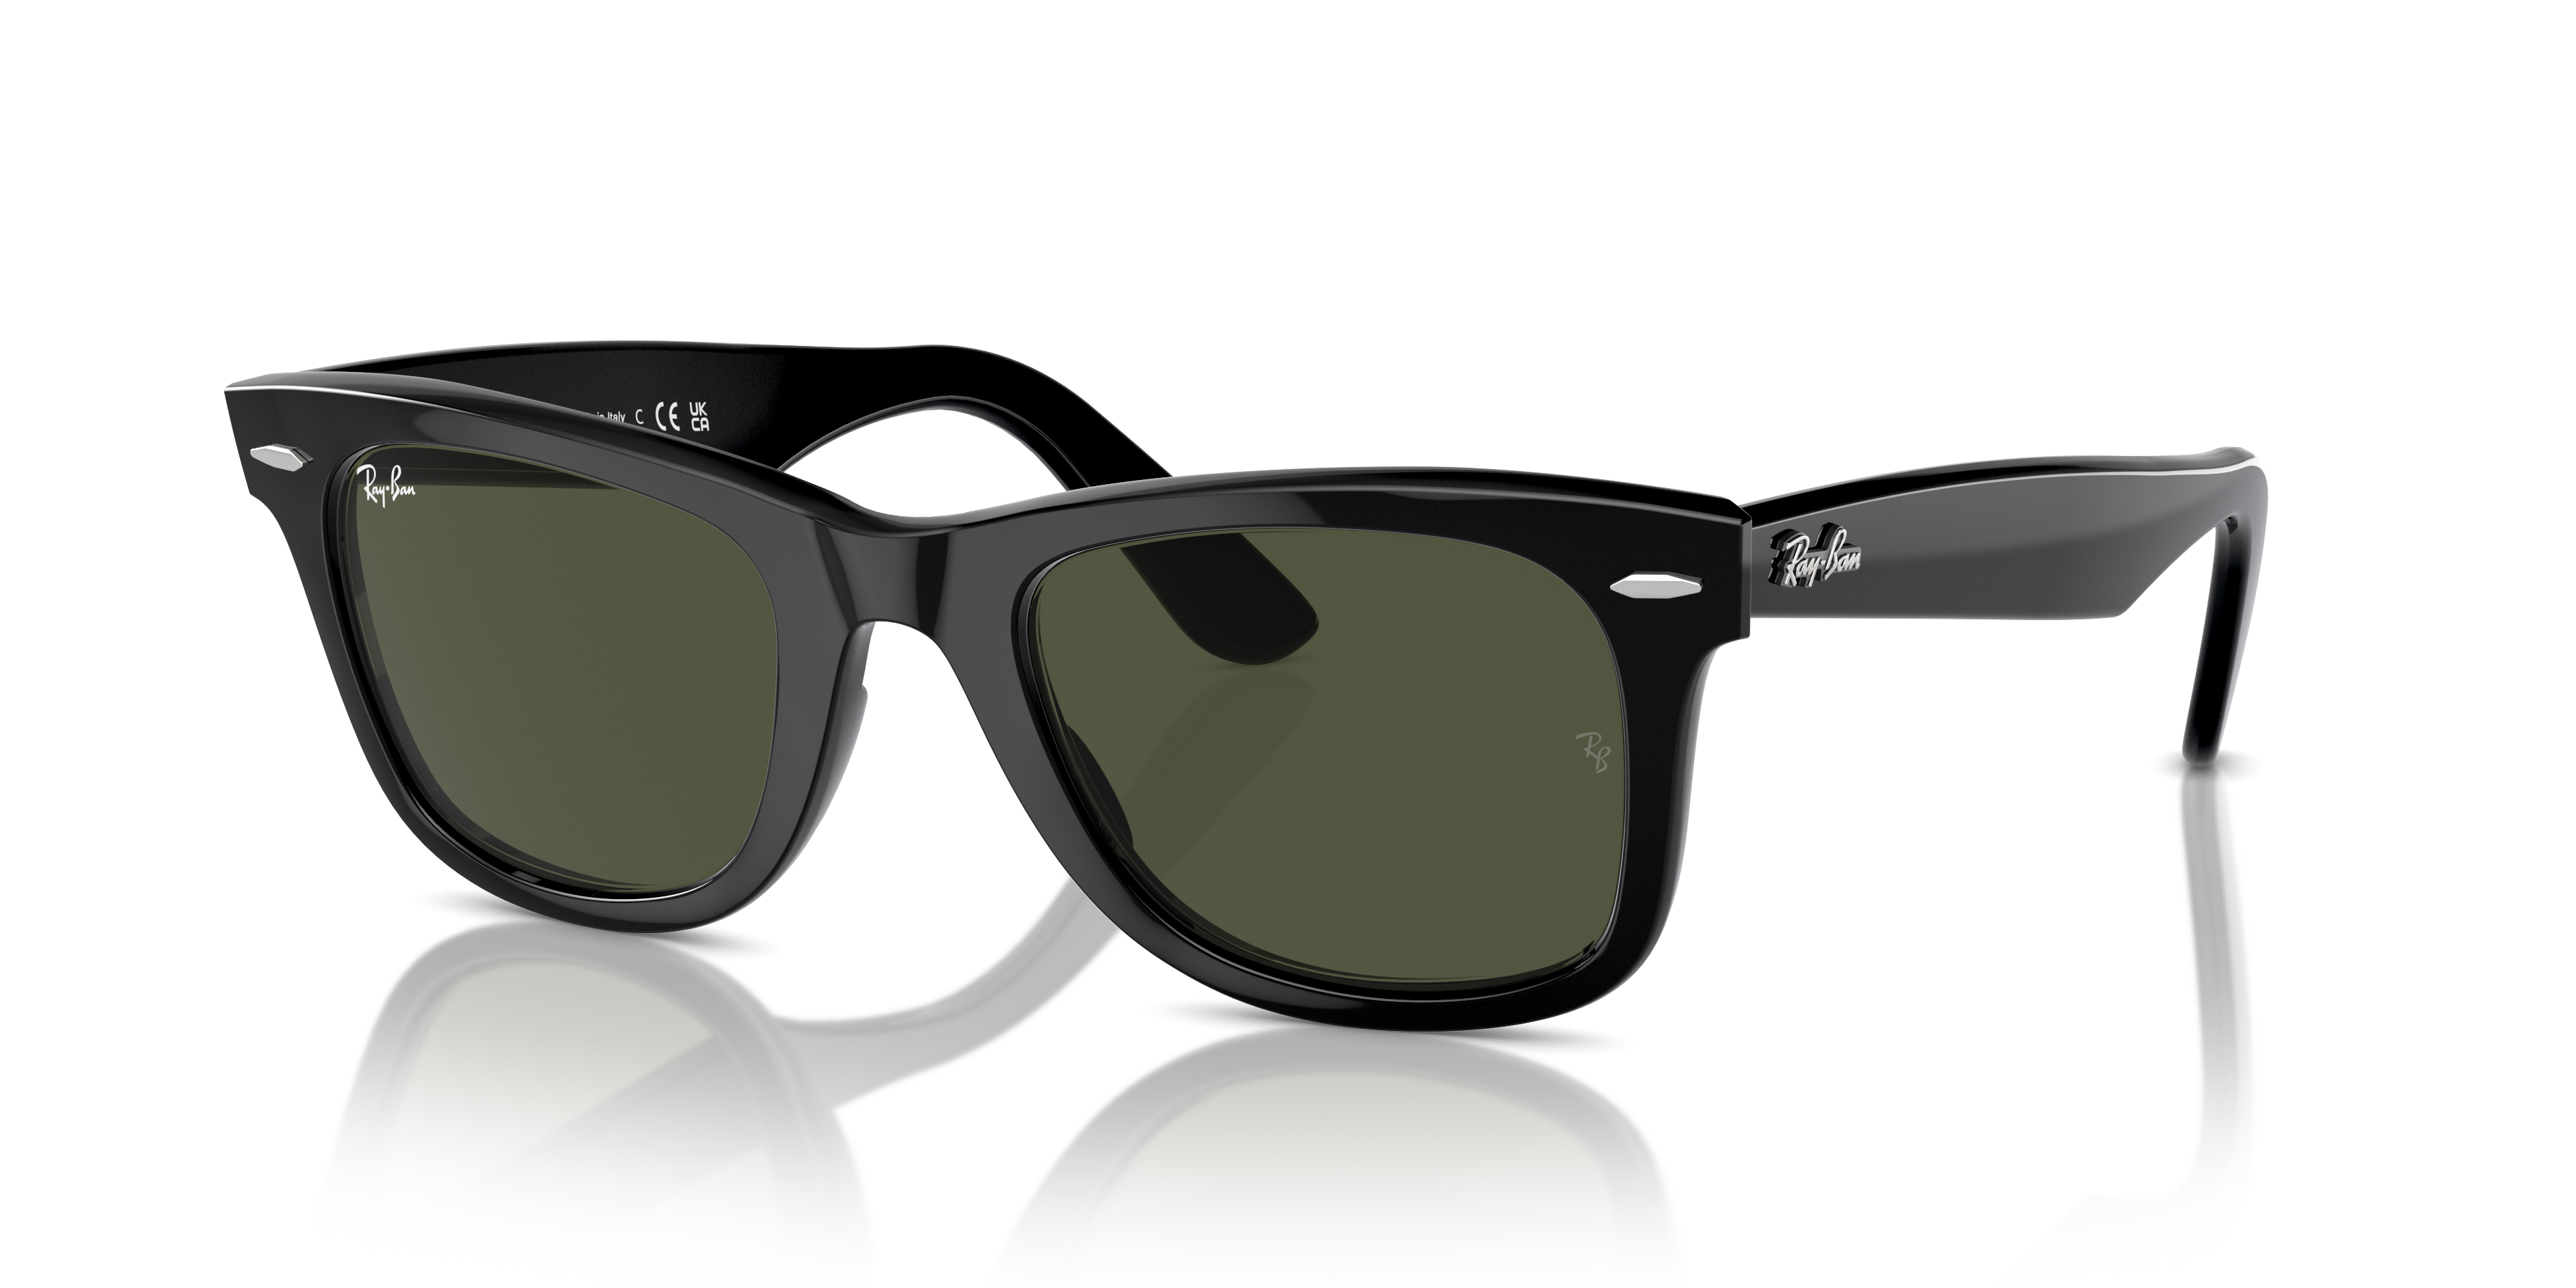 ORIGINAL WAYFARER CLASSIC Sunglasses in Black and Green - RB2140 